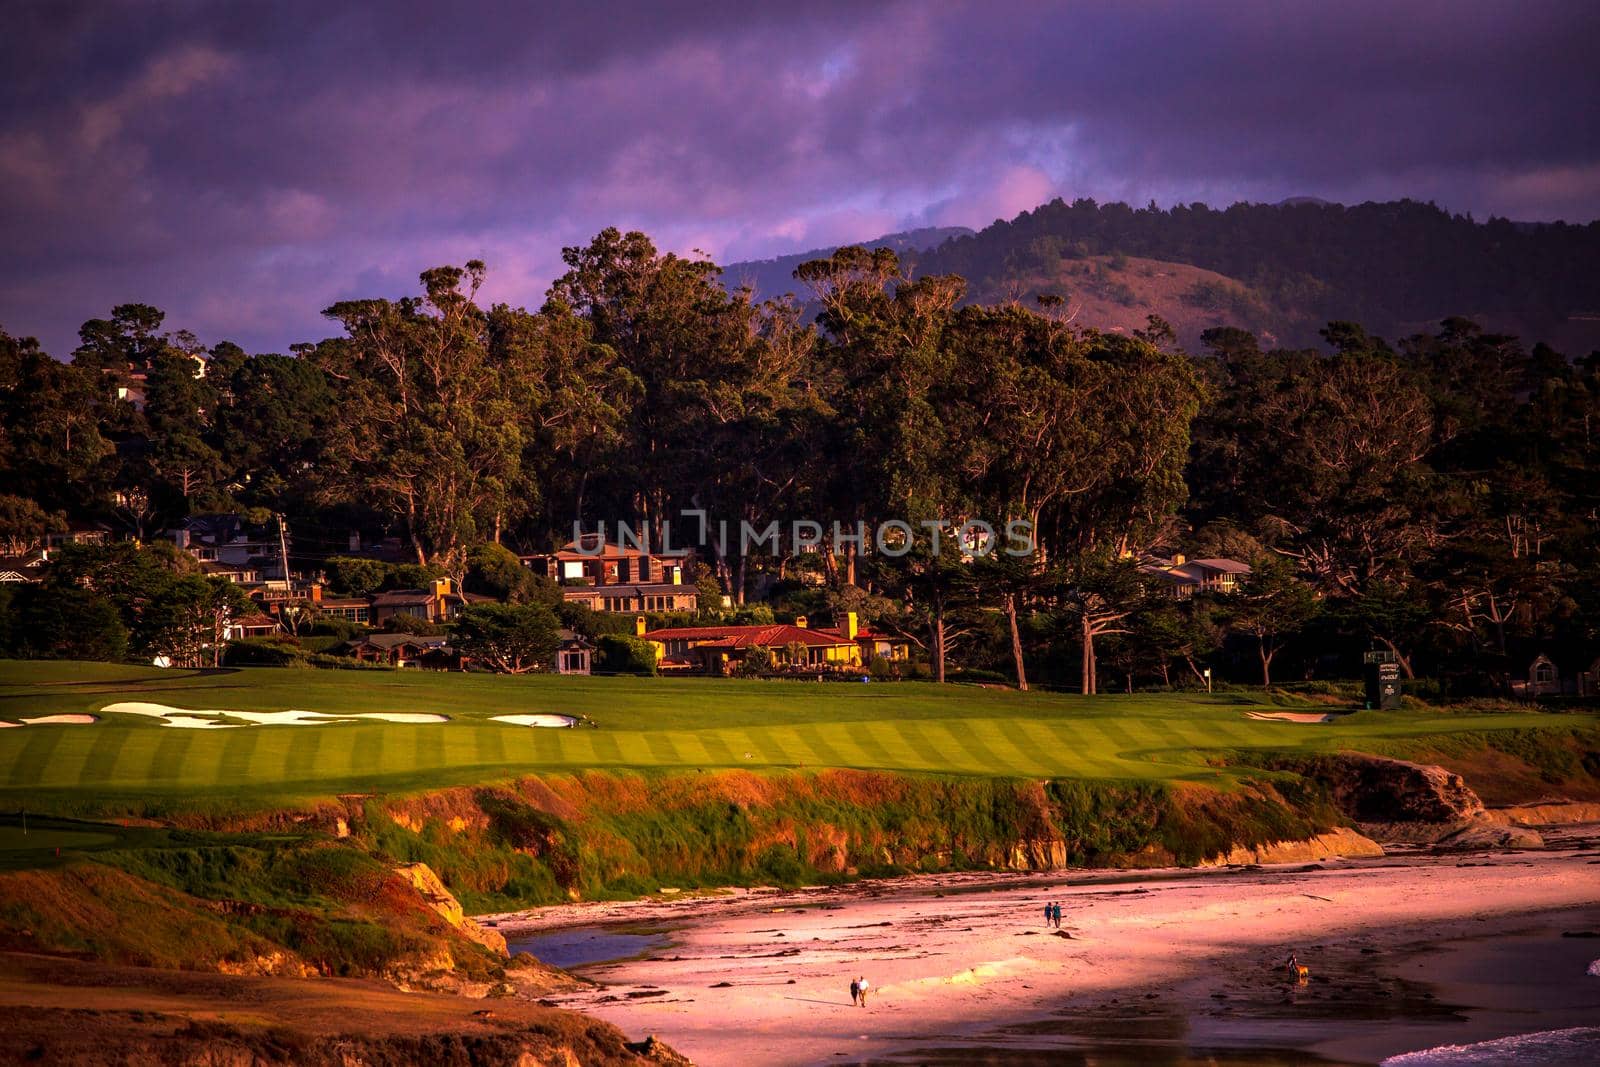 coastline golf course in California by photogolfer